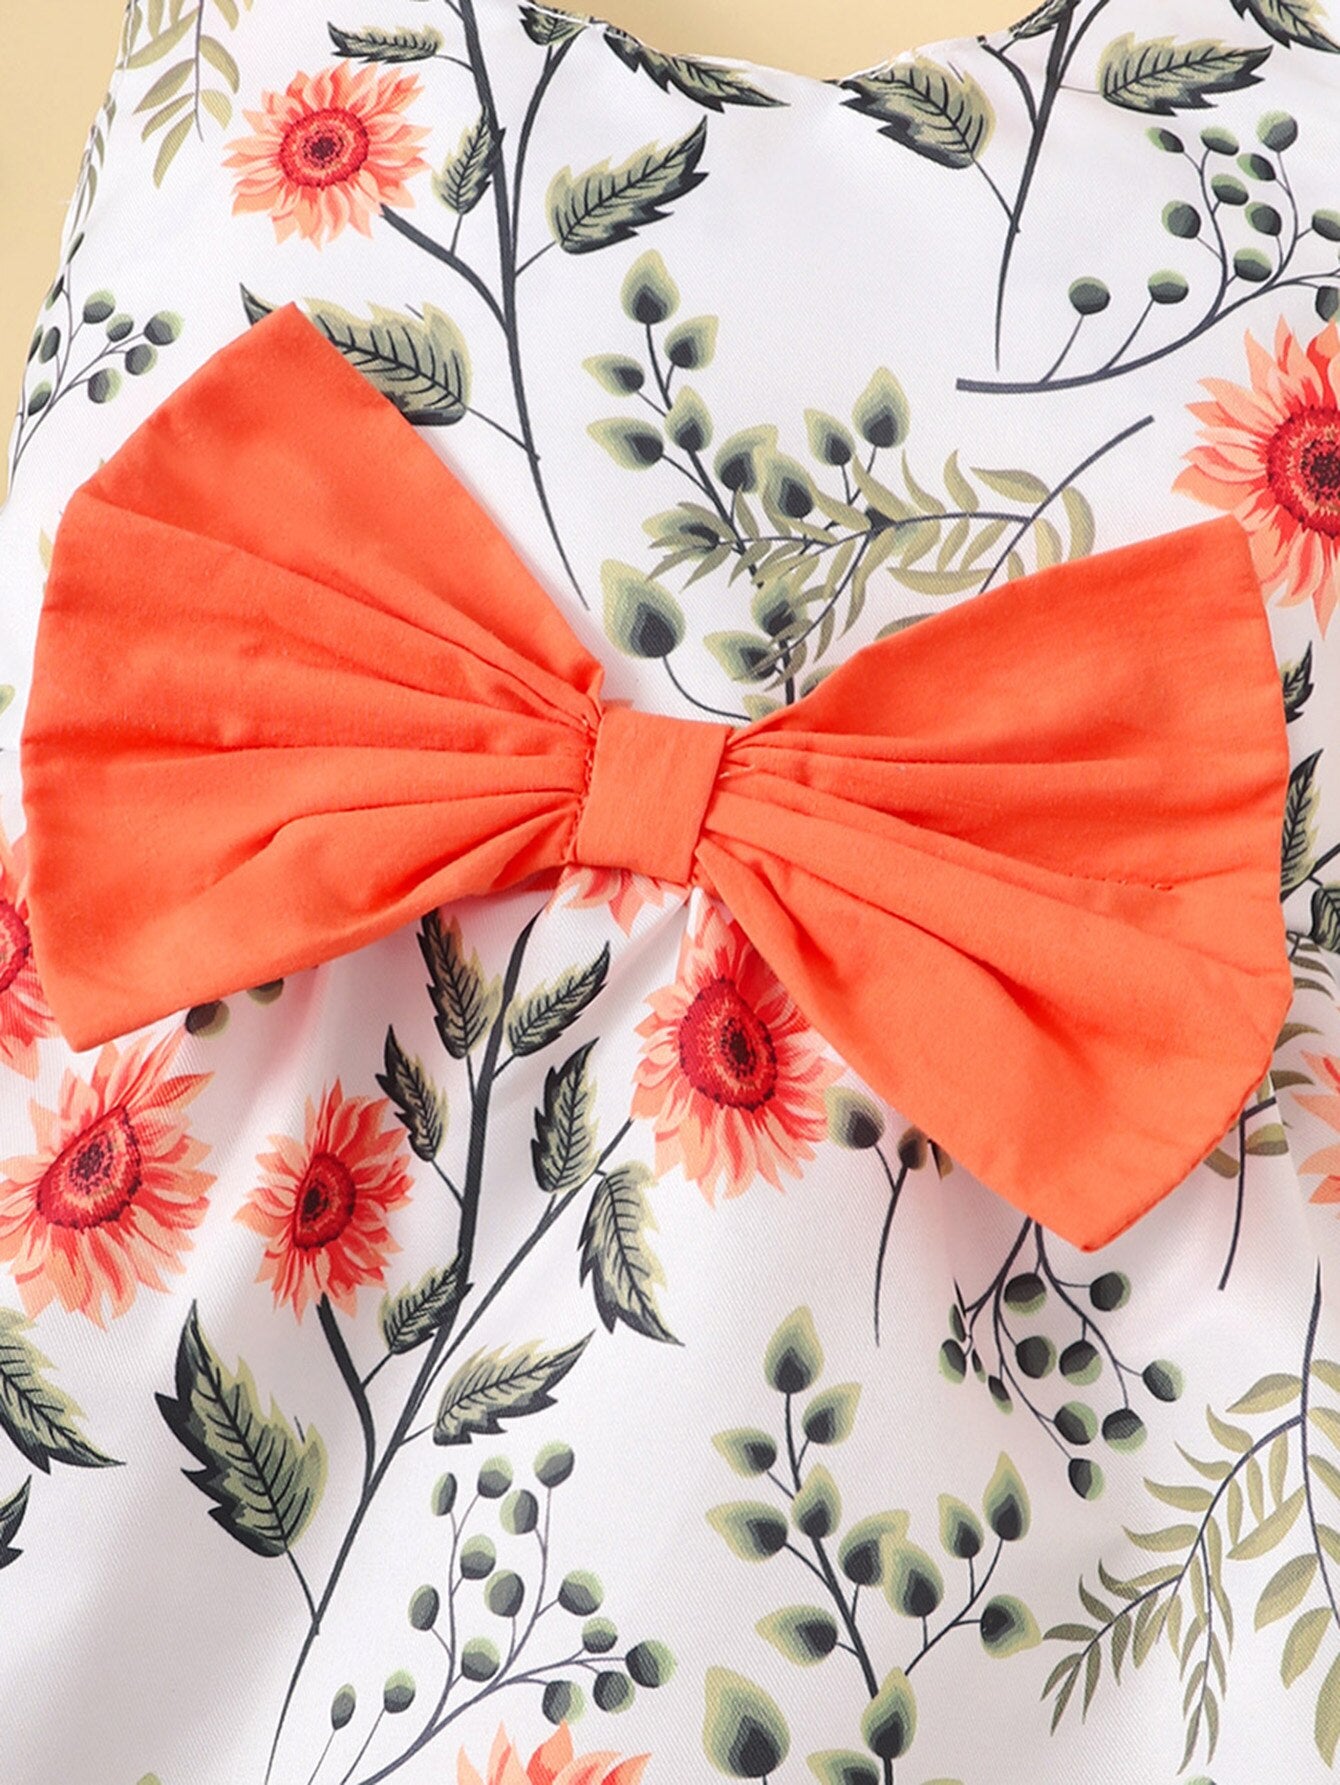 Infant/Toddler Floral Bow Sleeveless Dress